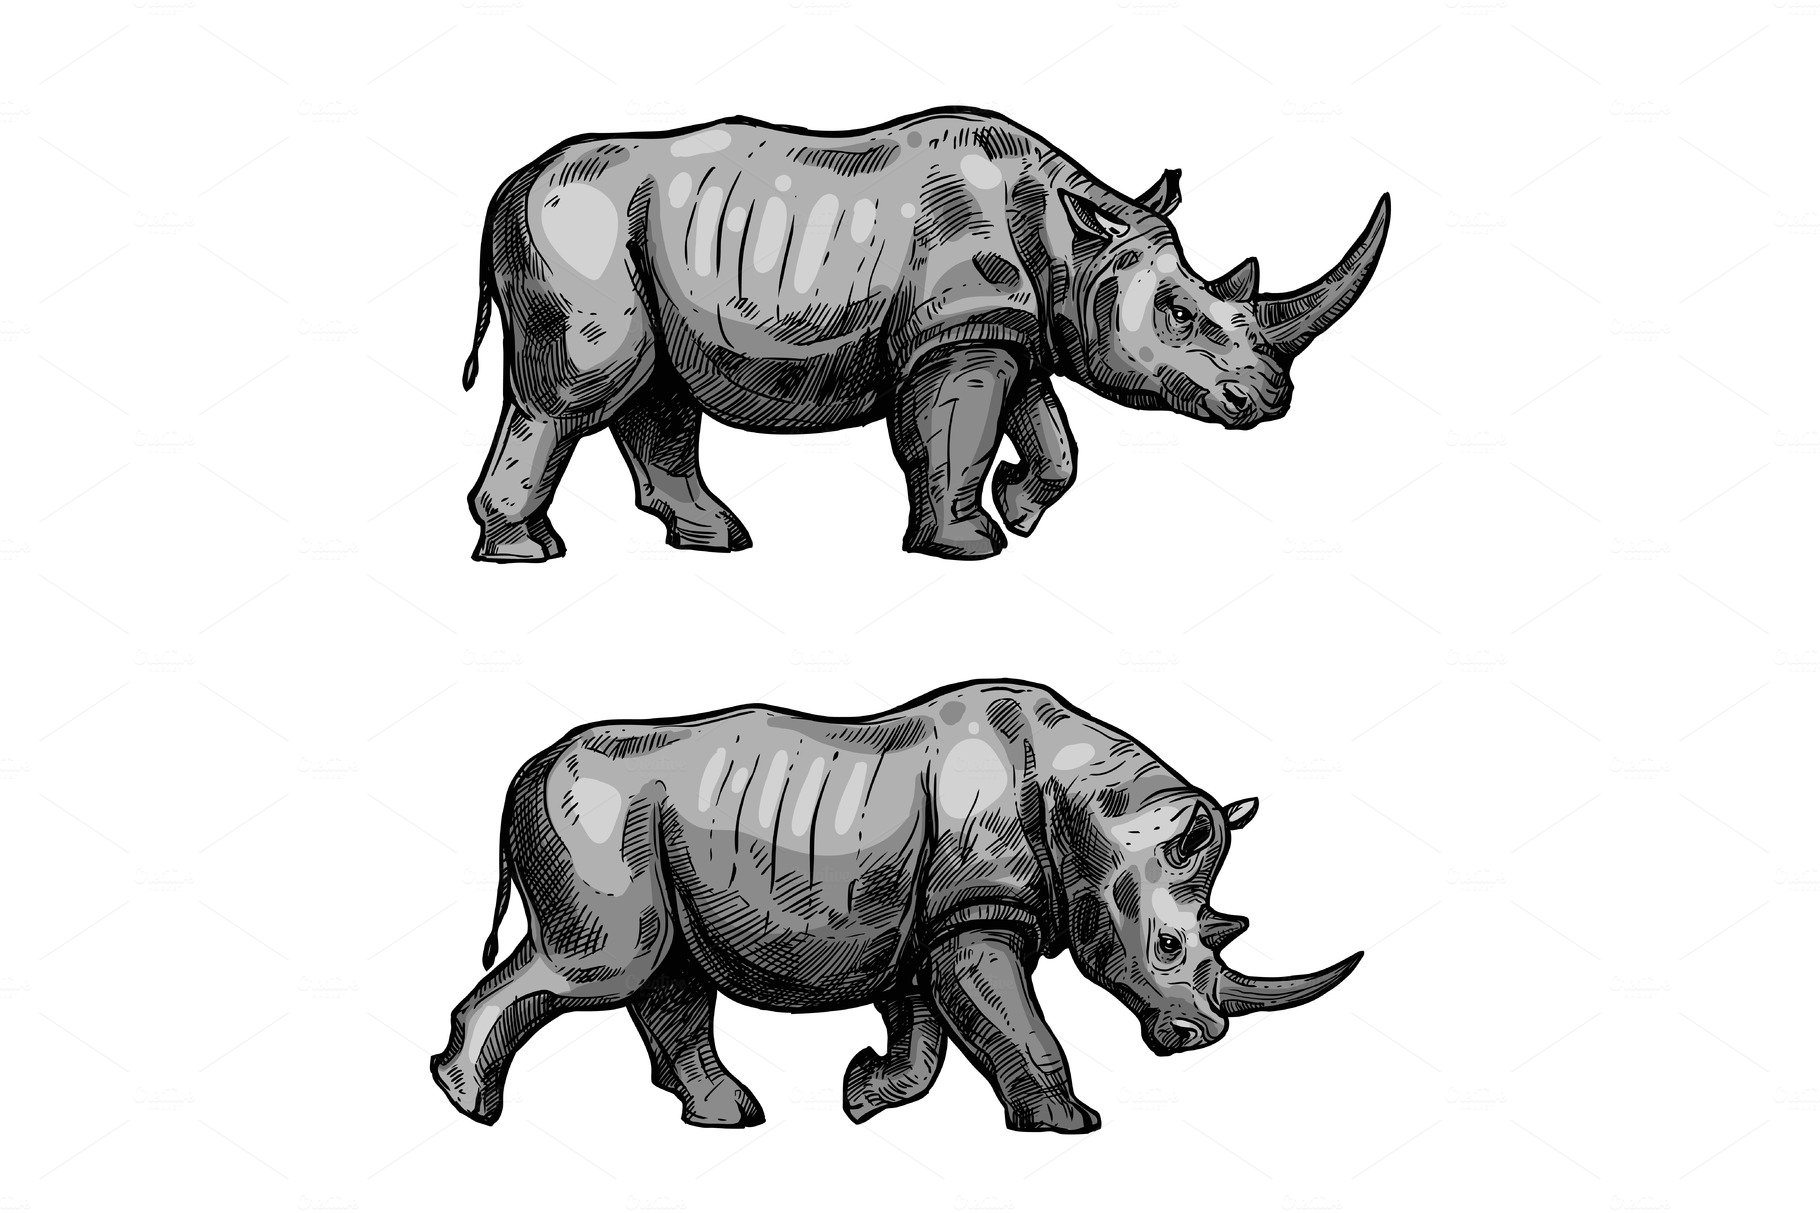 African rhino walking sketch of rhinoceros animal cover image.